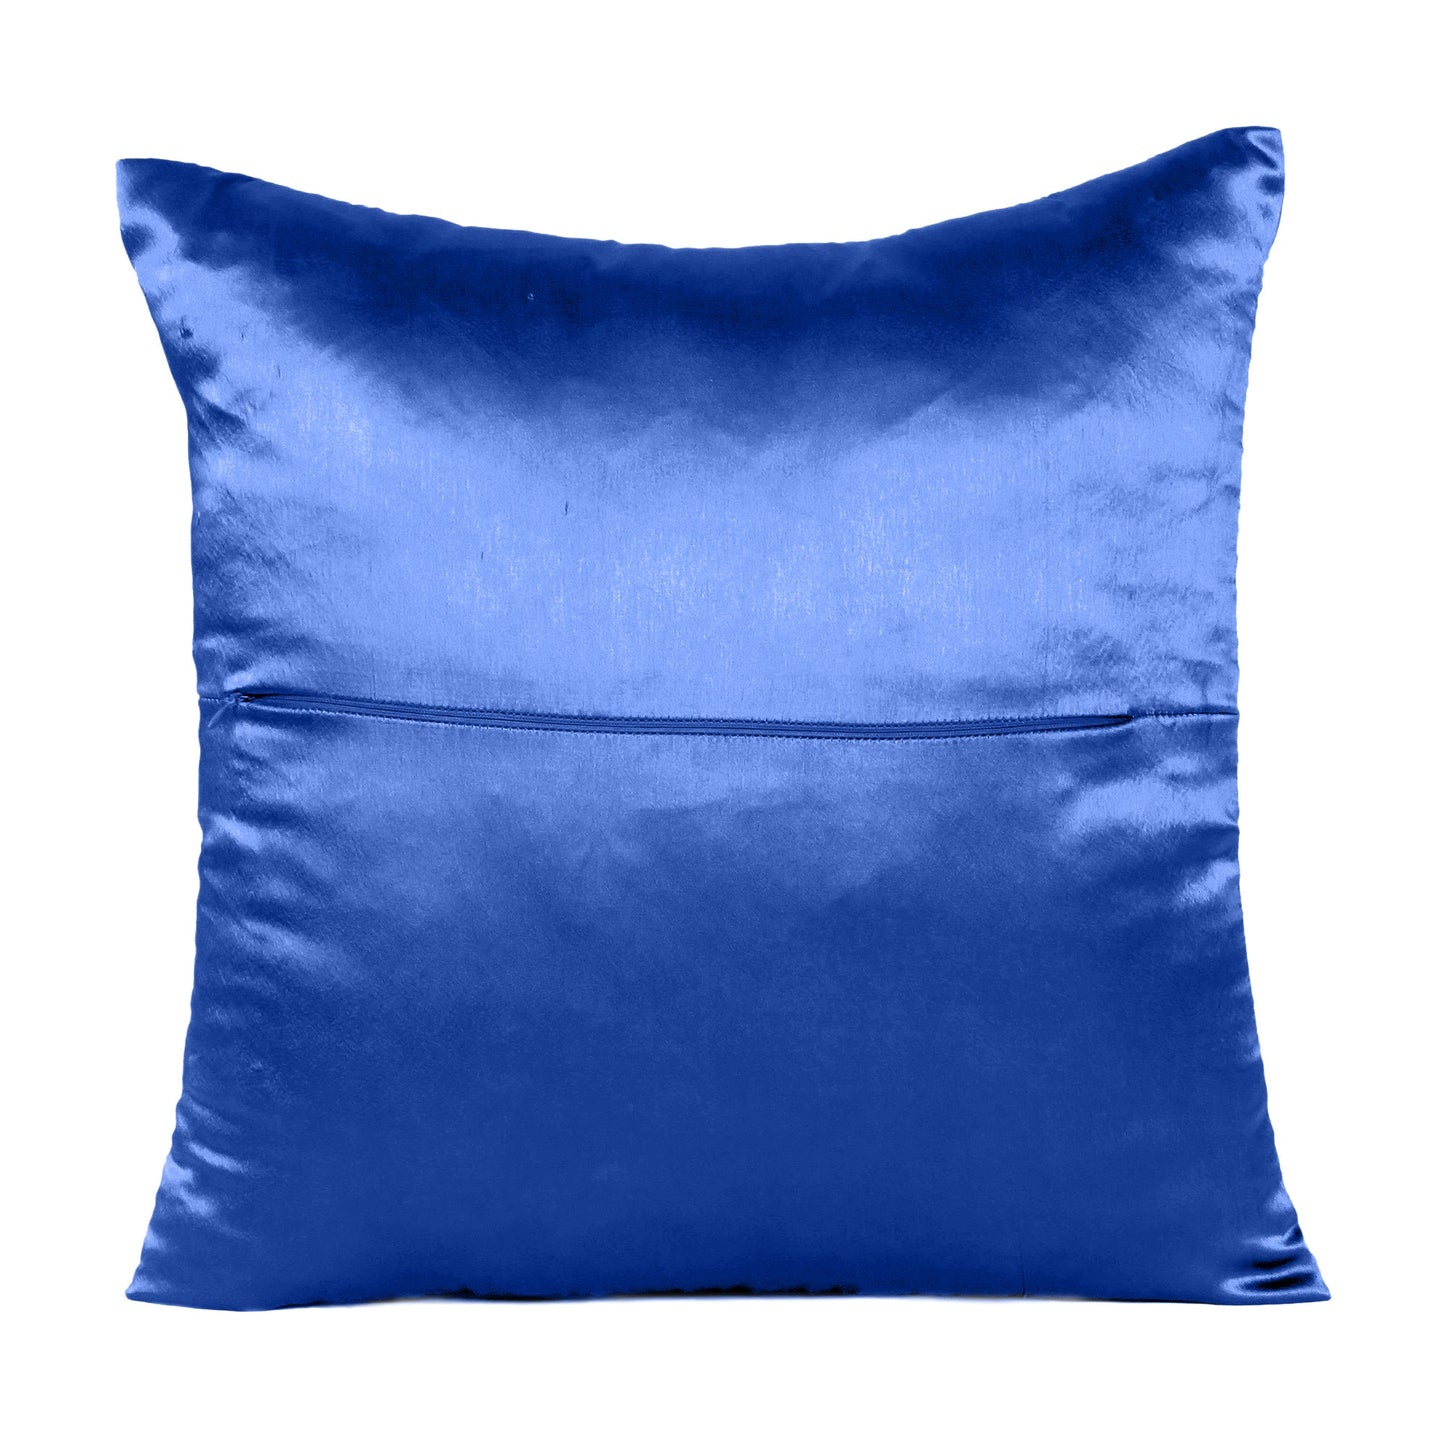 Luxury Soft Plain Satin Silk Cushion Cover in Set of 2 - Navy Blue